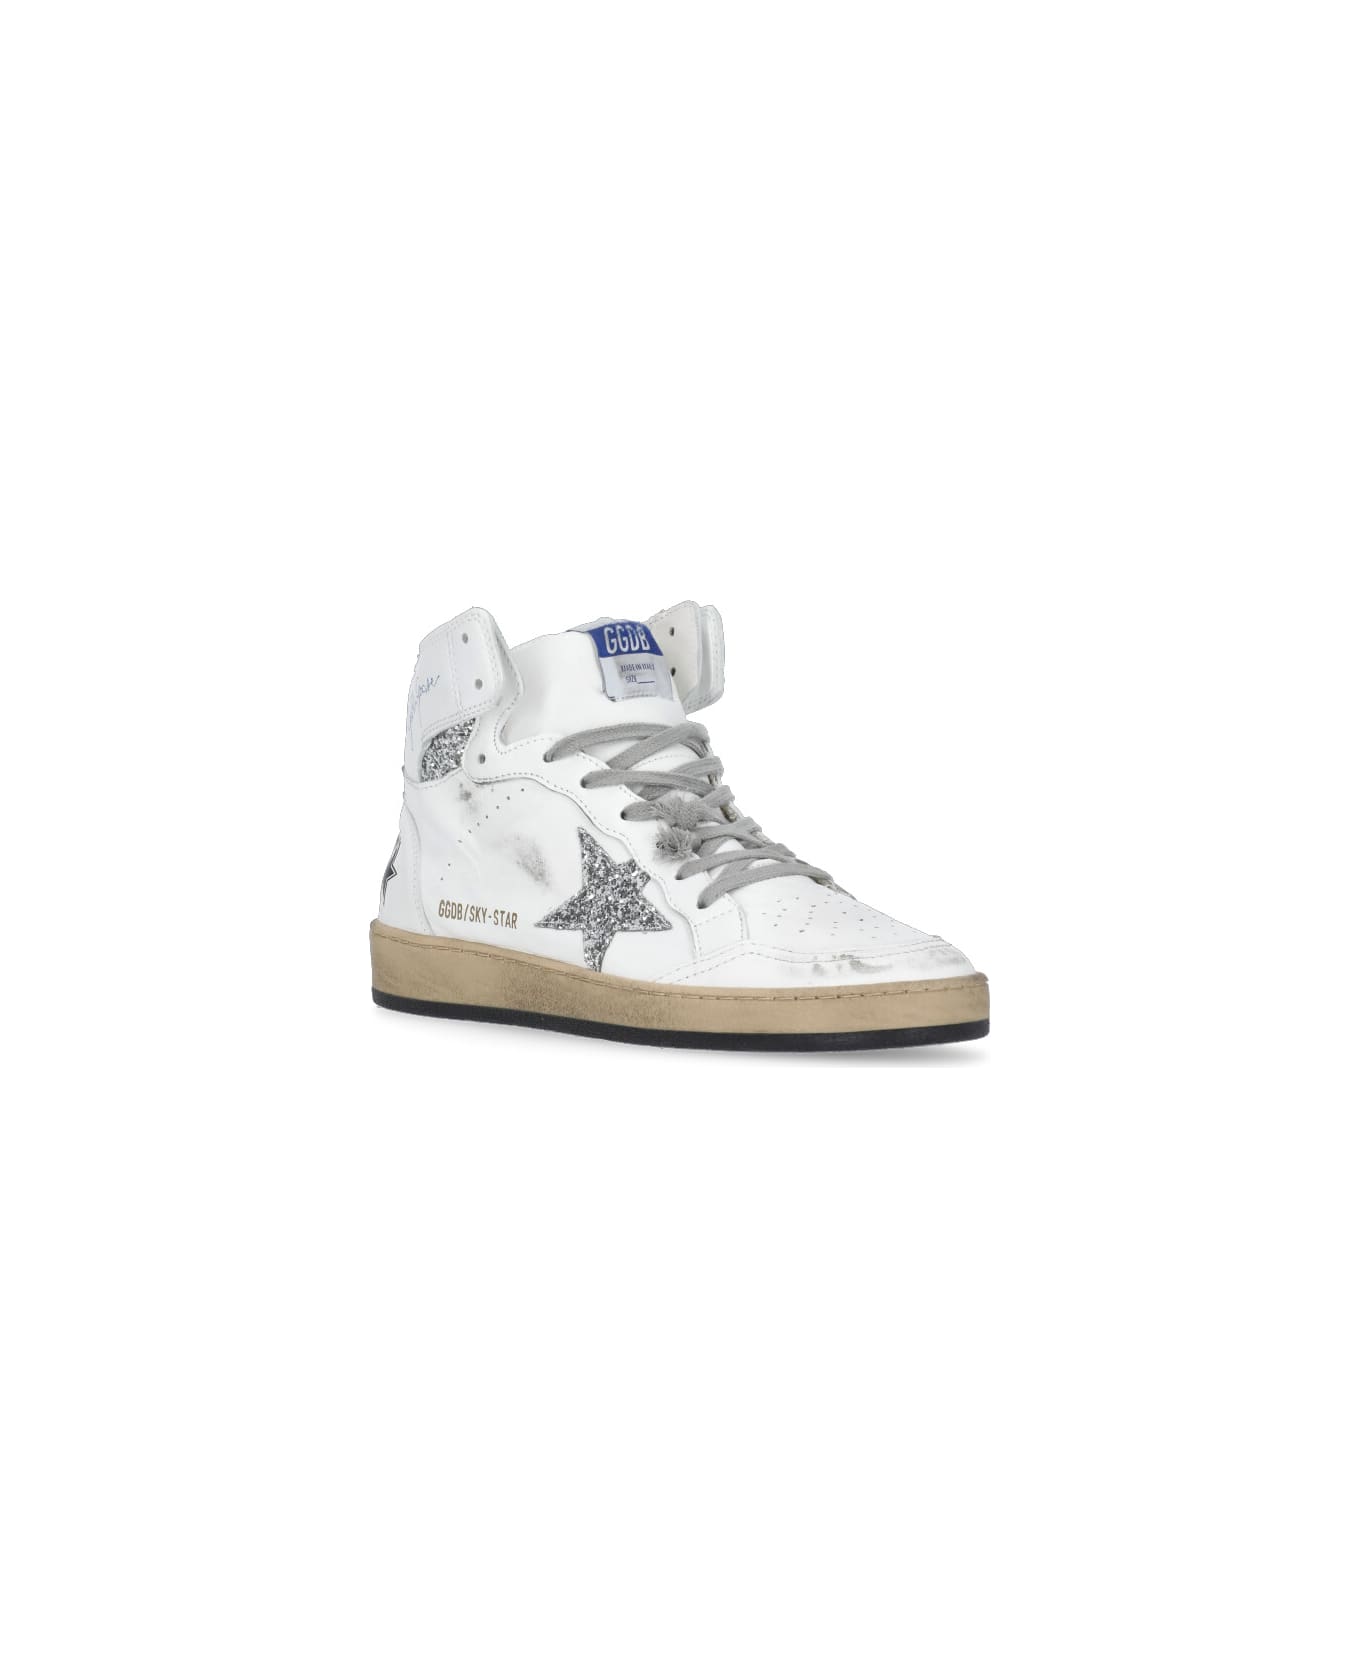 Golden Goose Sky Star Sneakers - White/Silver